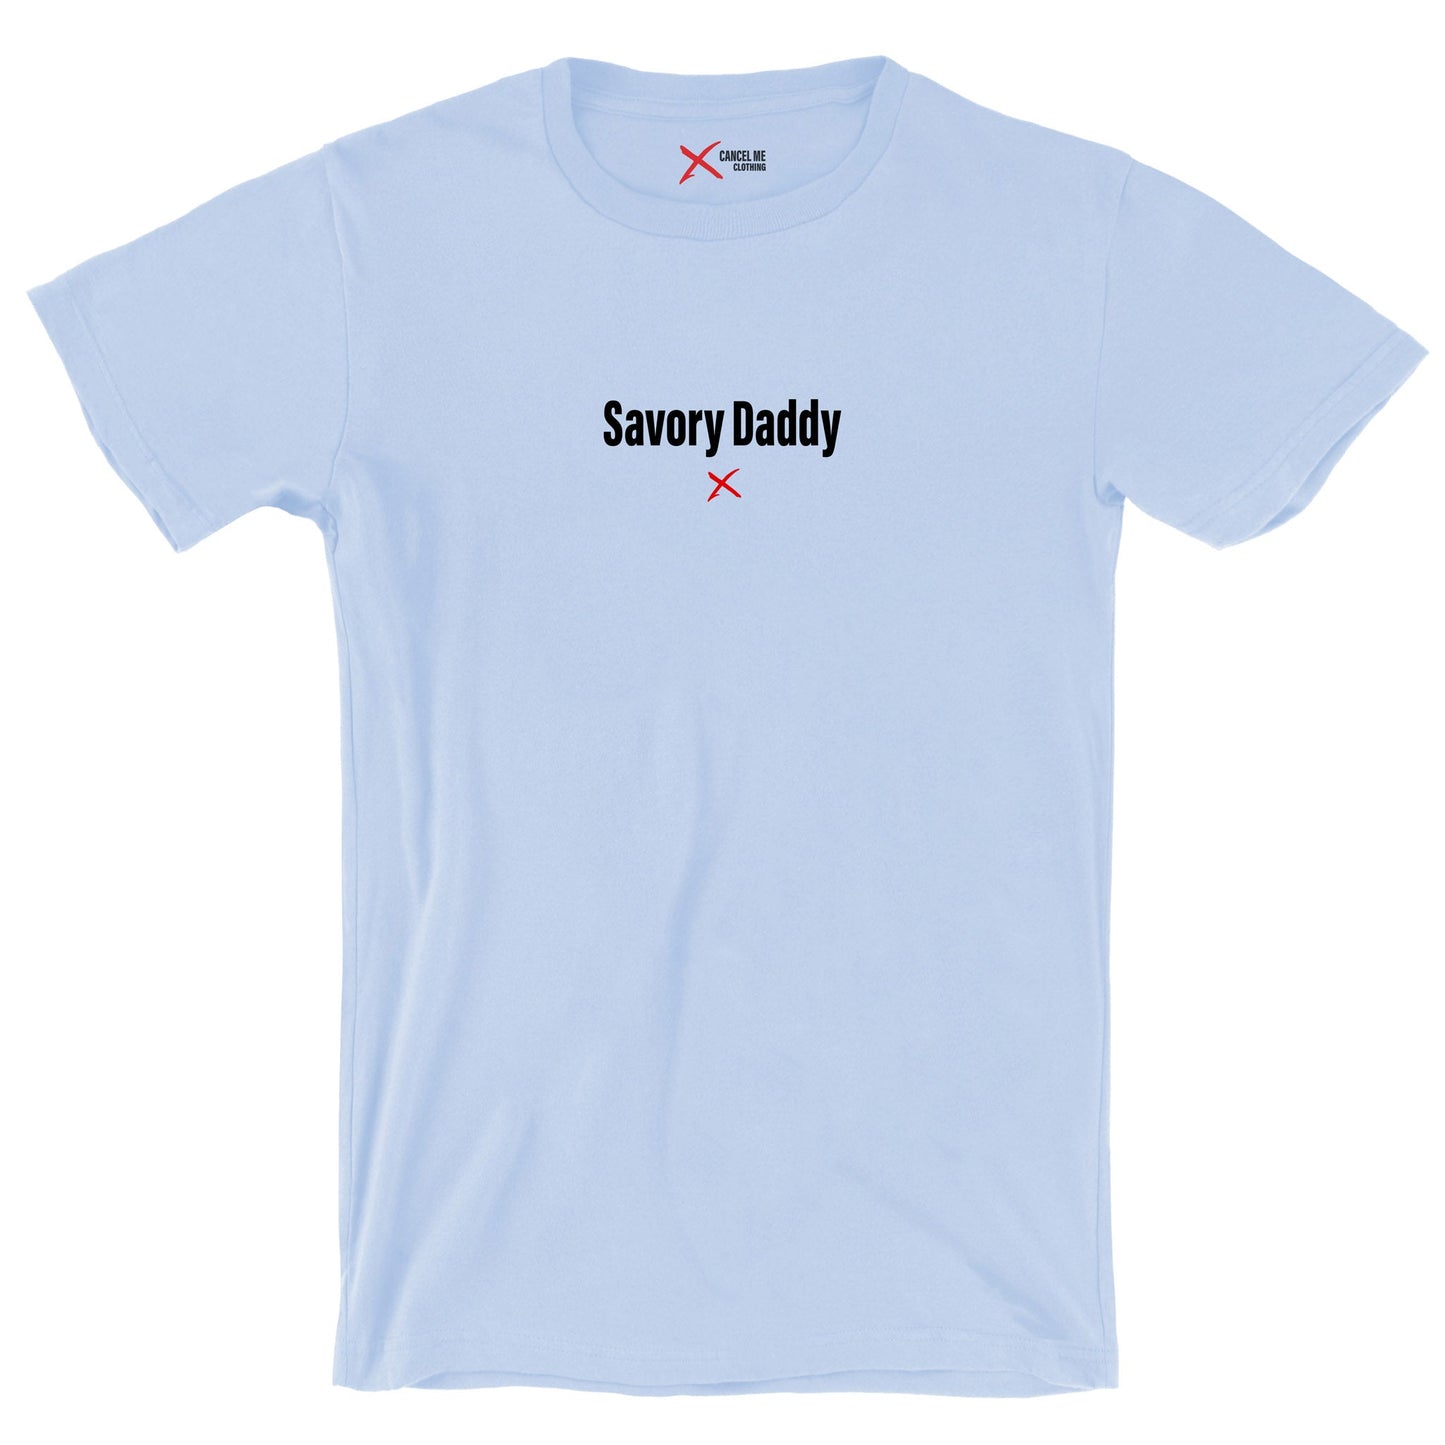 Savory Daddy - Shirt